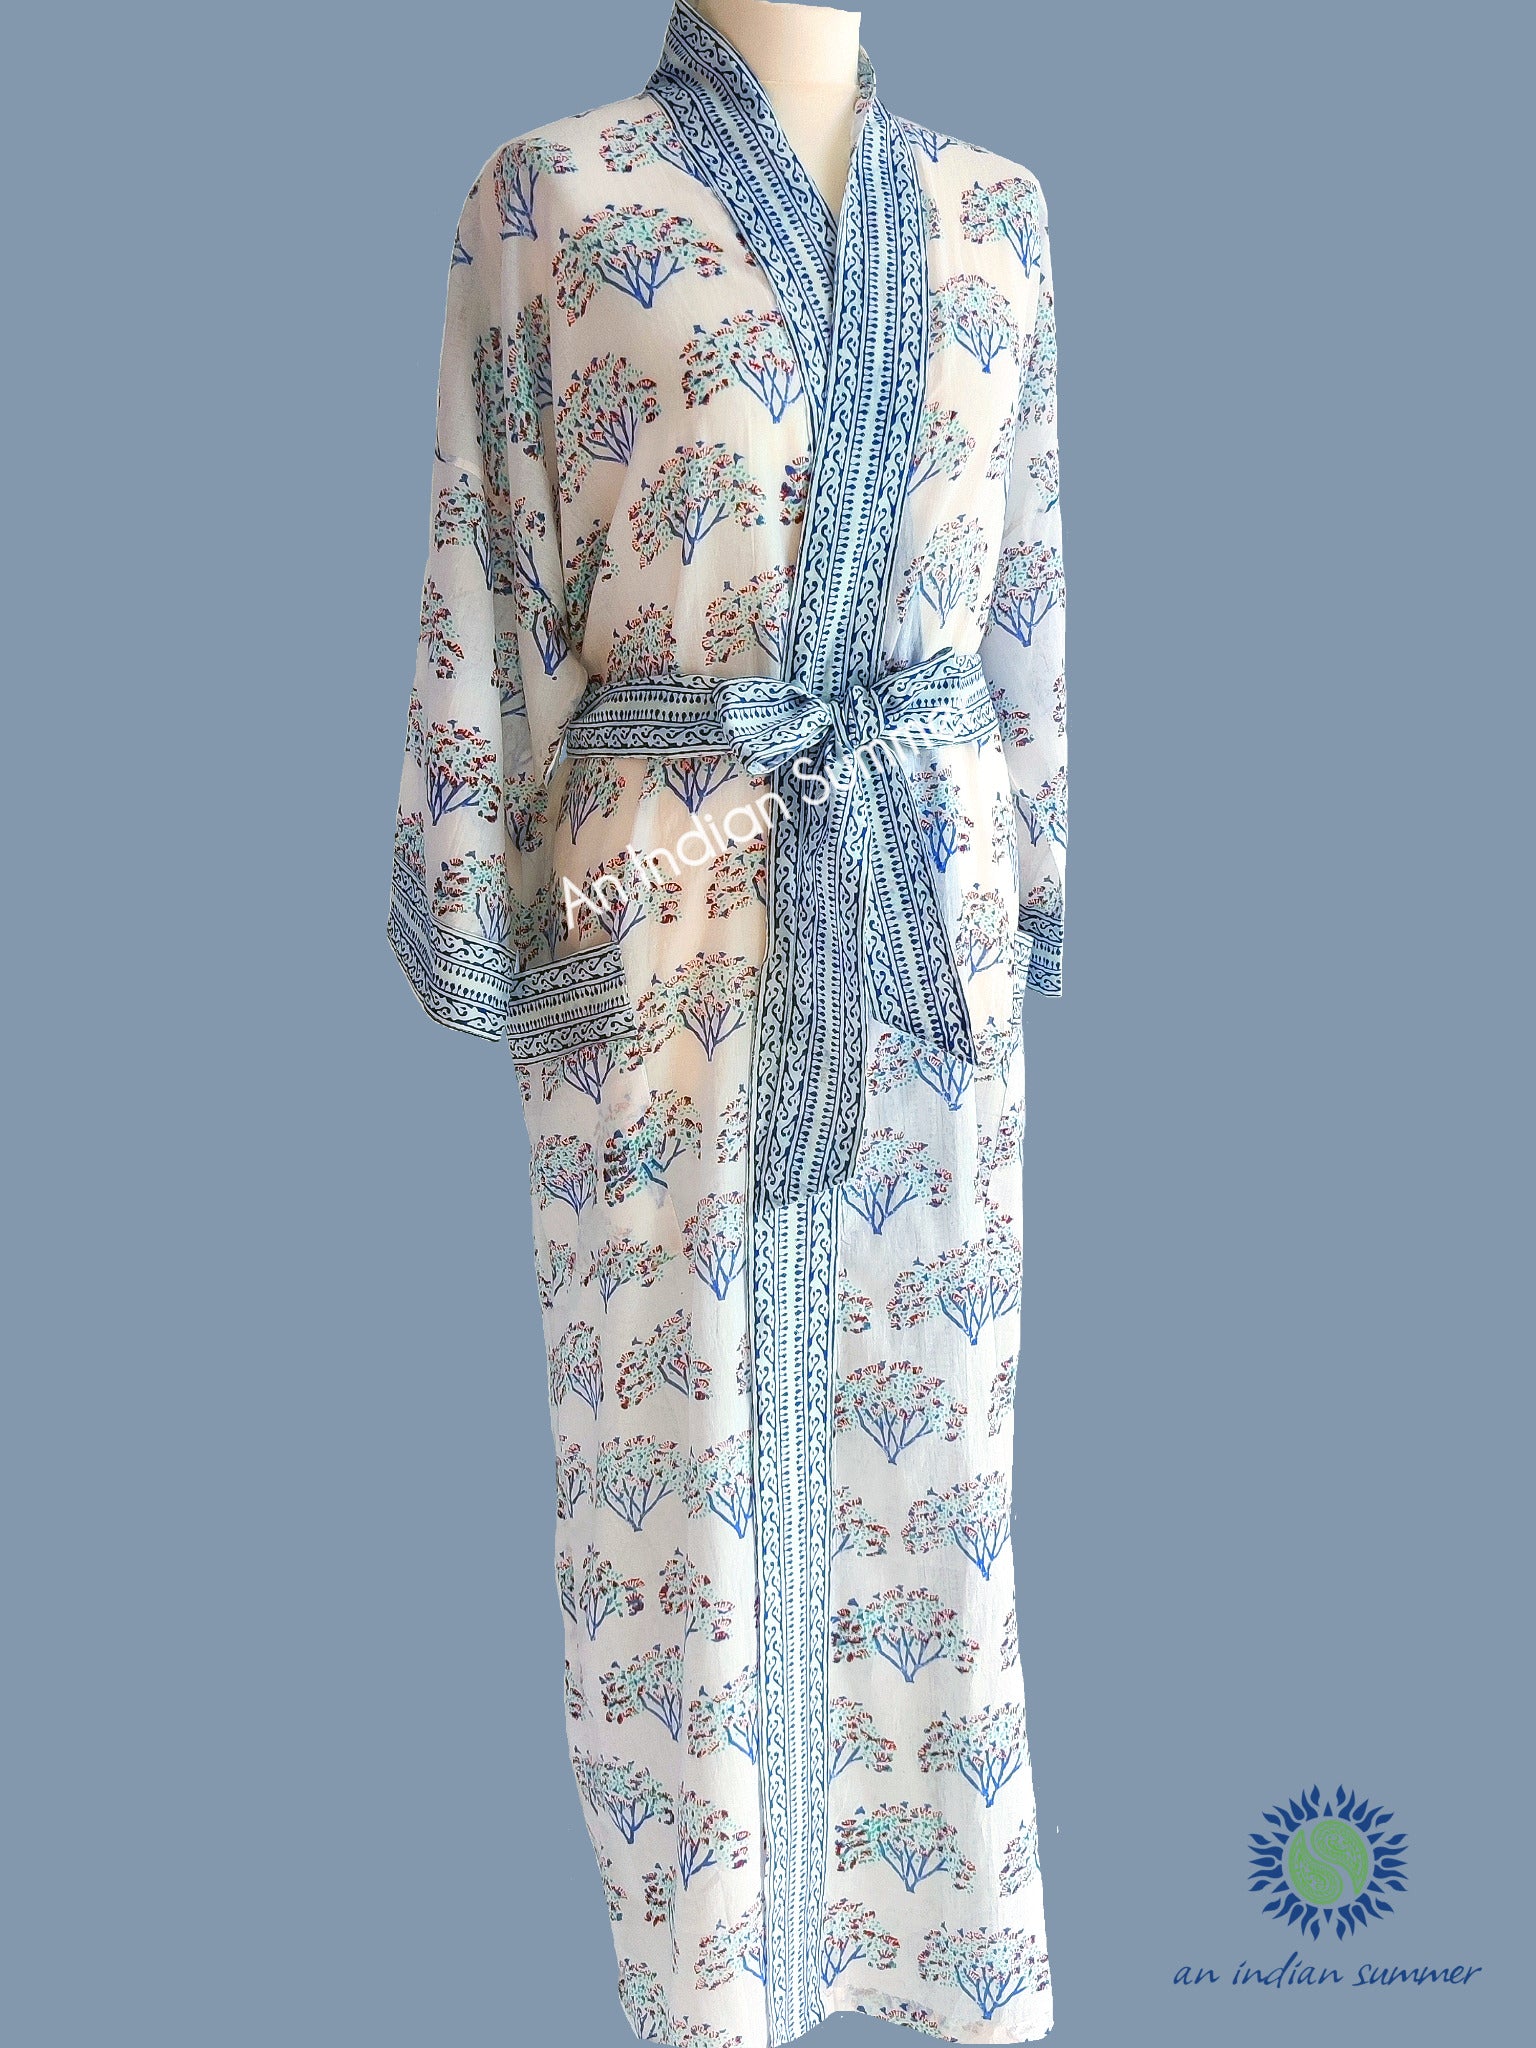 Long Kimono Robe | Bonsai Tree | Tree Block Print | Hand Block Printed | Cotton Voile | An Indian Summer | Seasonless Timeless Sustainable Ethical Authentic Artisan Conscious Clothing Lifestyle Brand